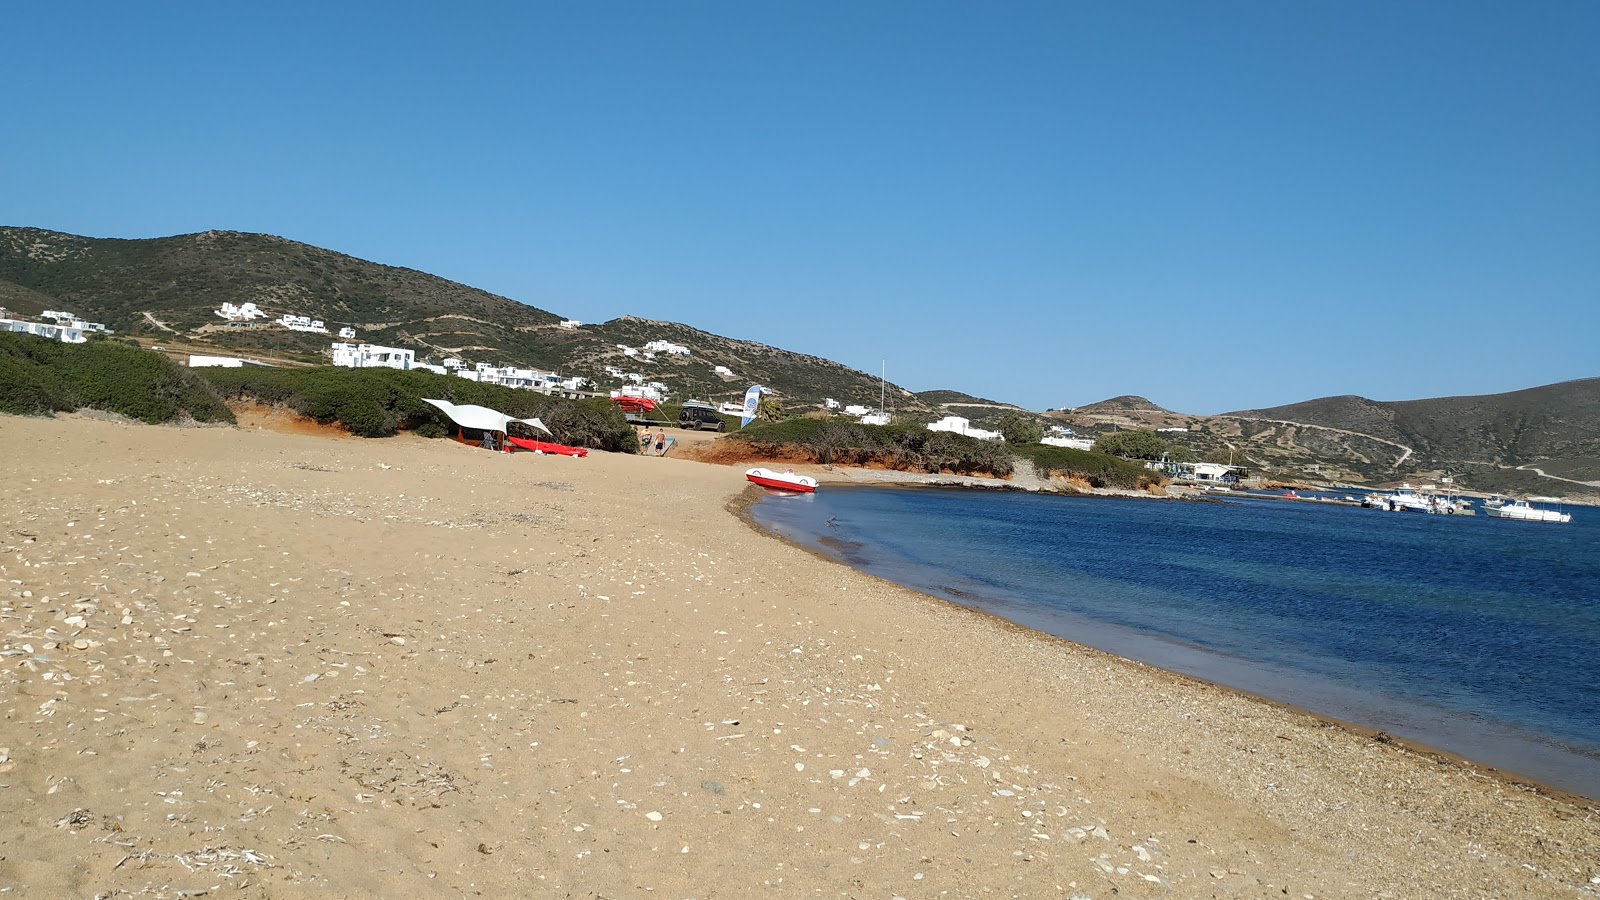 Zdjęcie Vathis Volos beach i osada